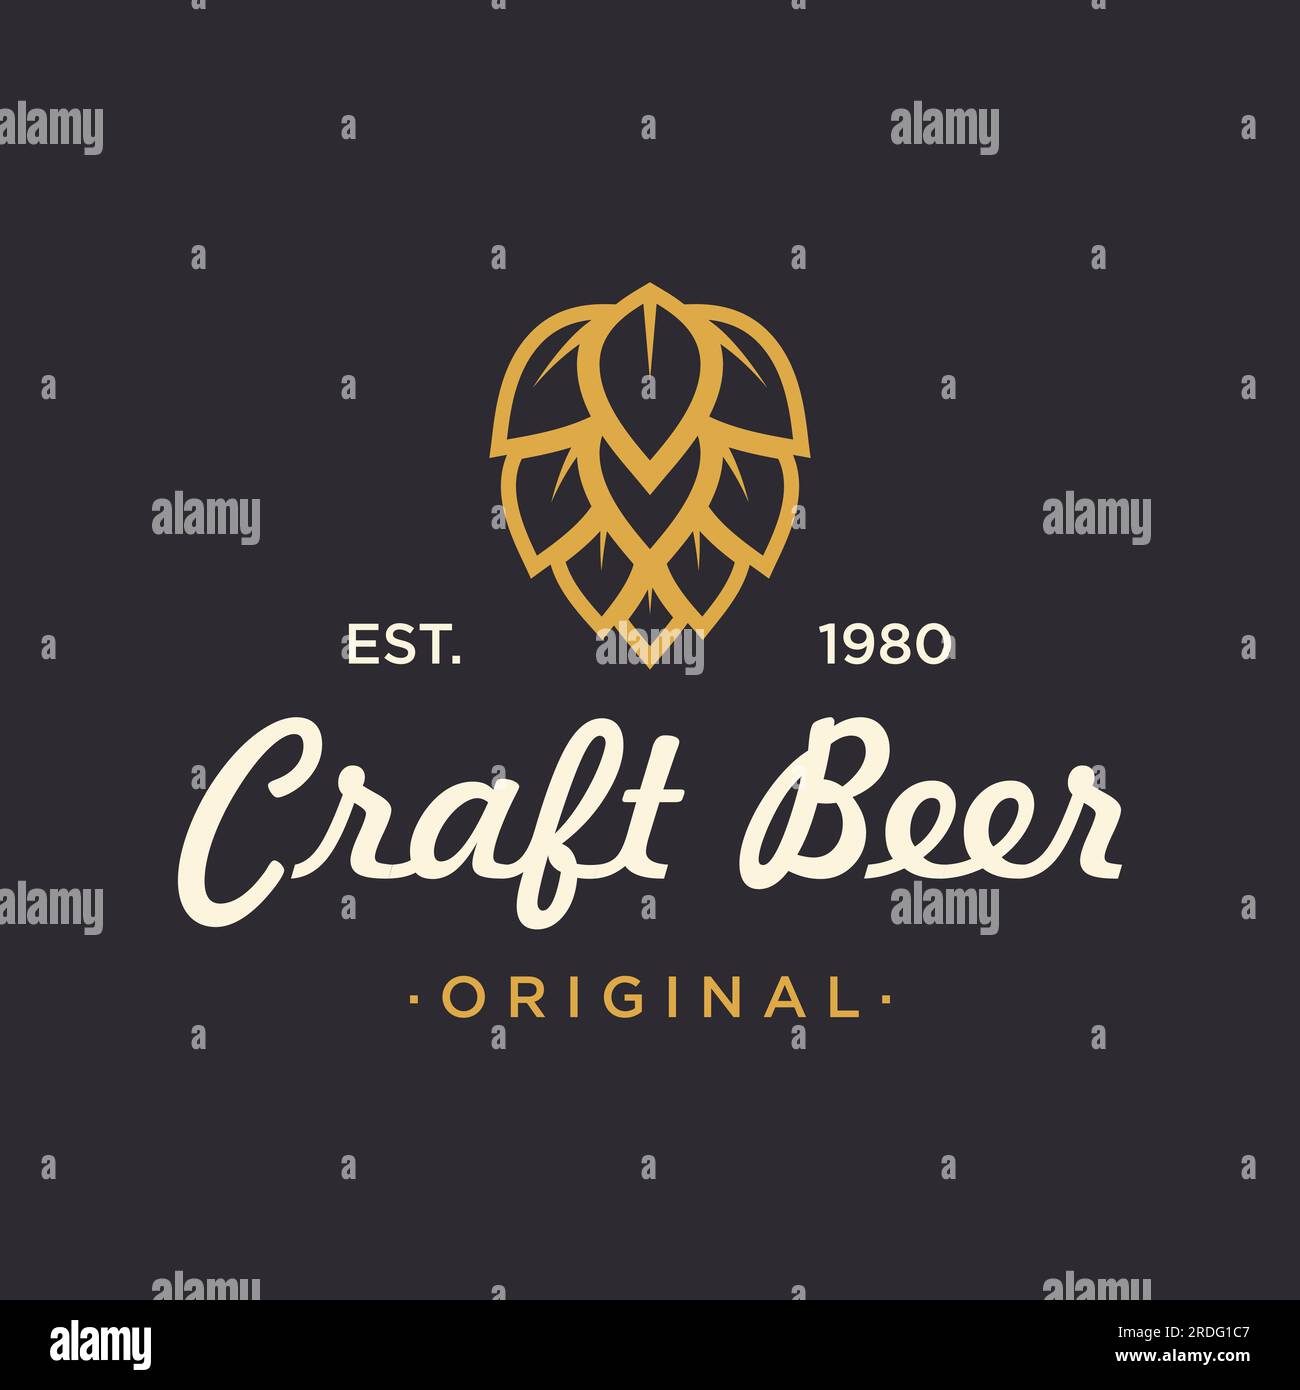 Premium quality vintage craft beer logo template. For badges, emblems, beer companies, bars, taverns. Stock Vector